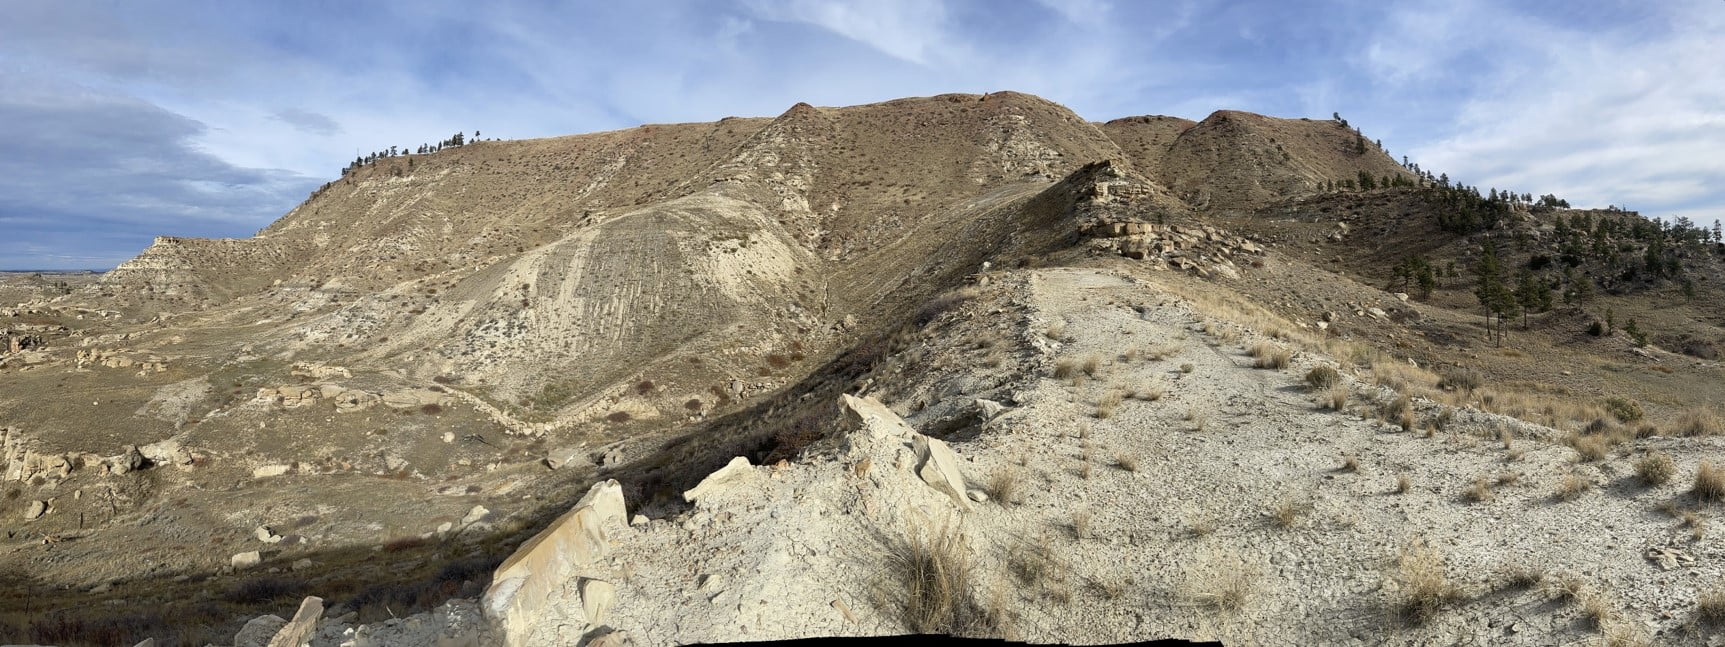 Figure 9. Nitrogen scar at Dunn Mountain, My Green Earth ranch (Oct. 30, 2022)